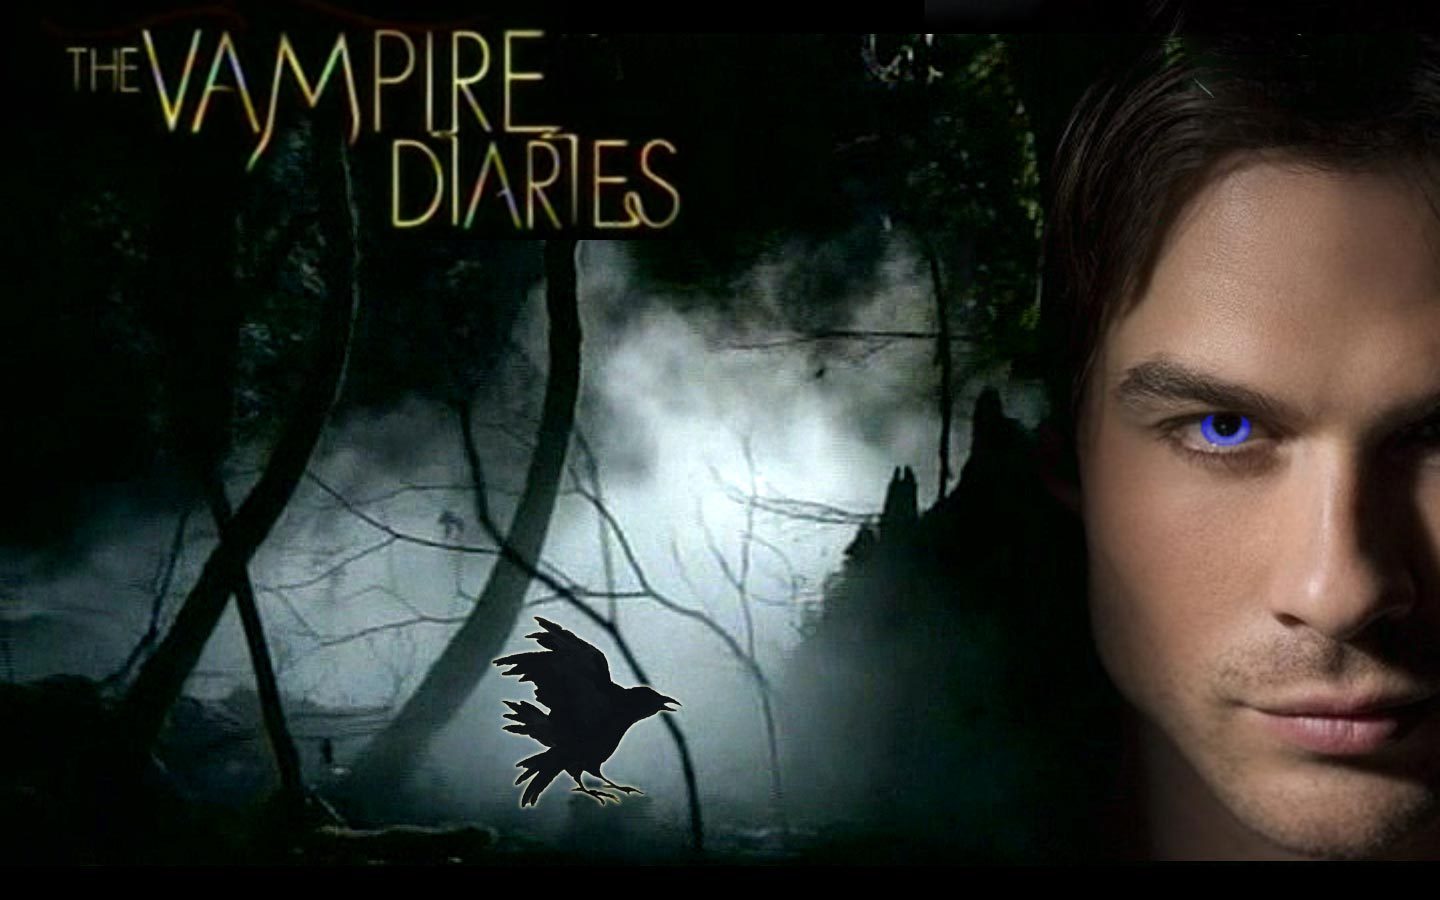 Vampire Diaries Wallpaper Px HDwallsource